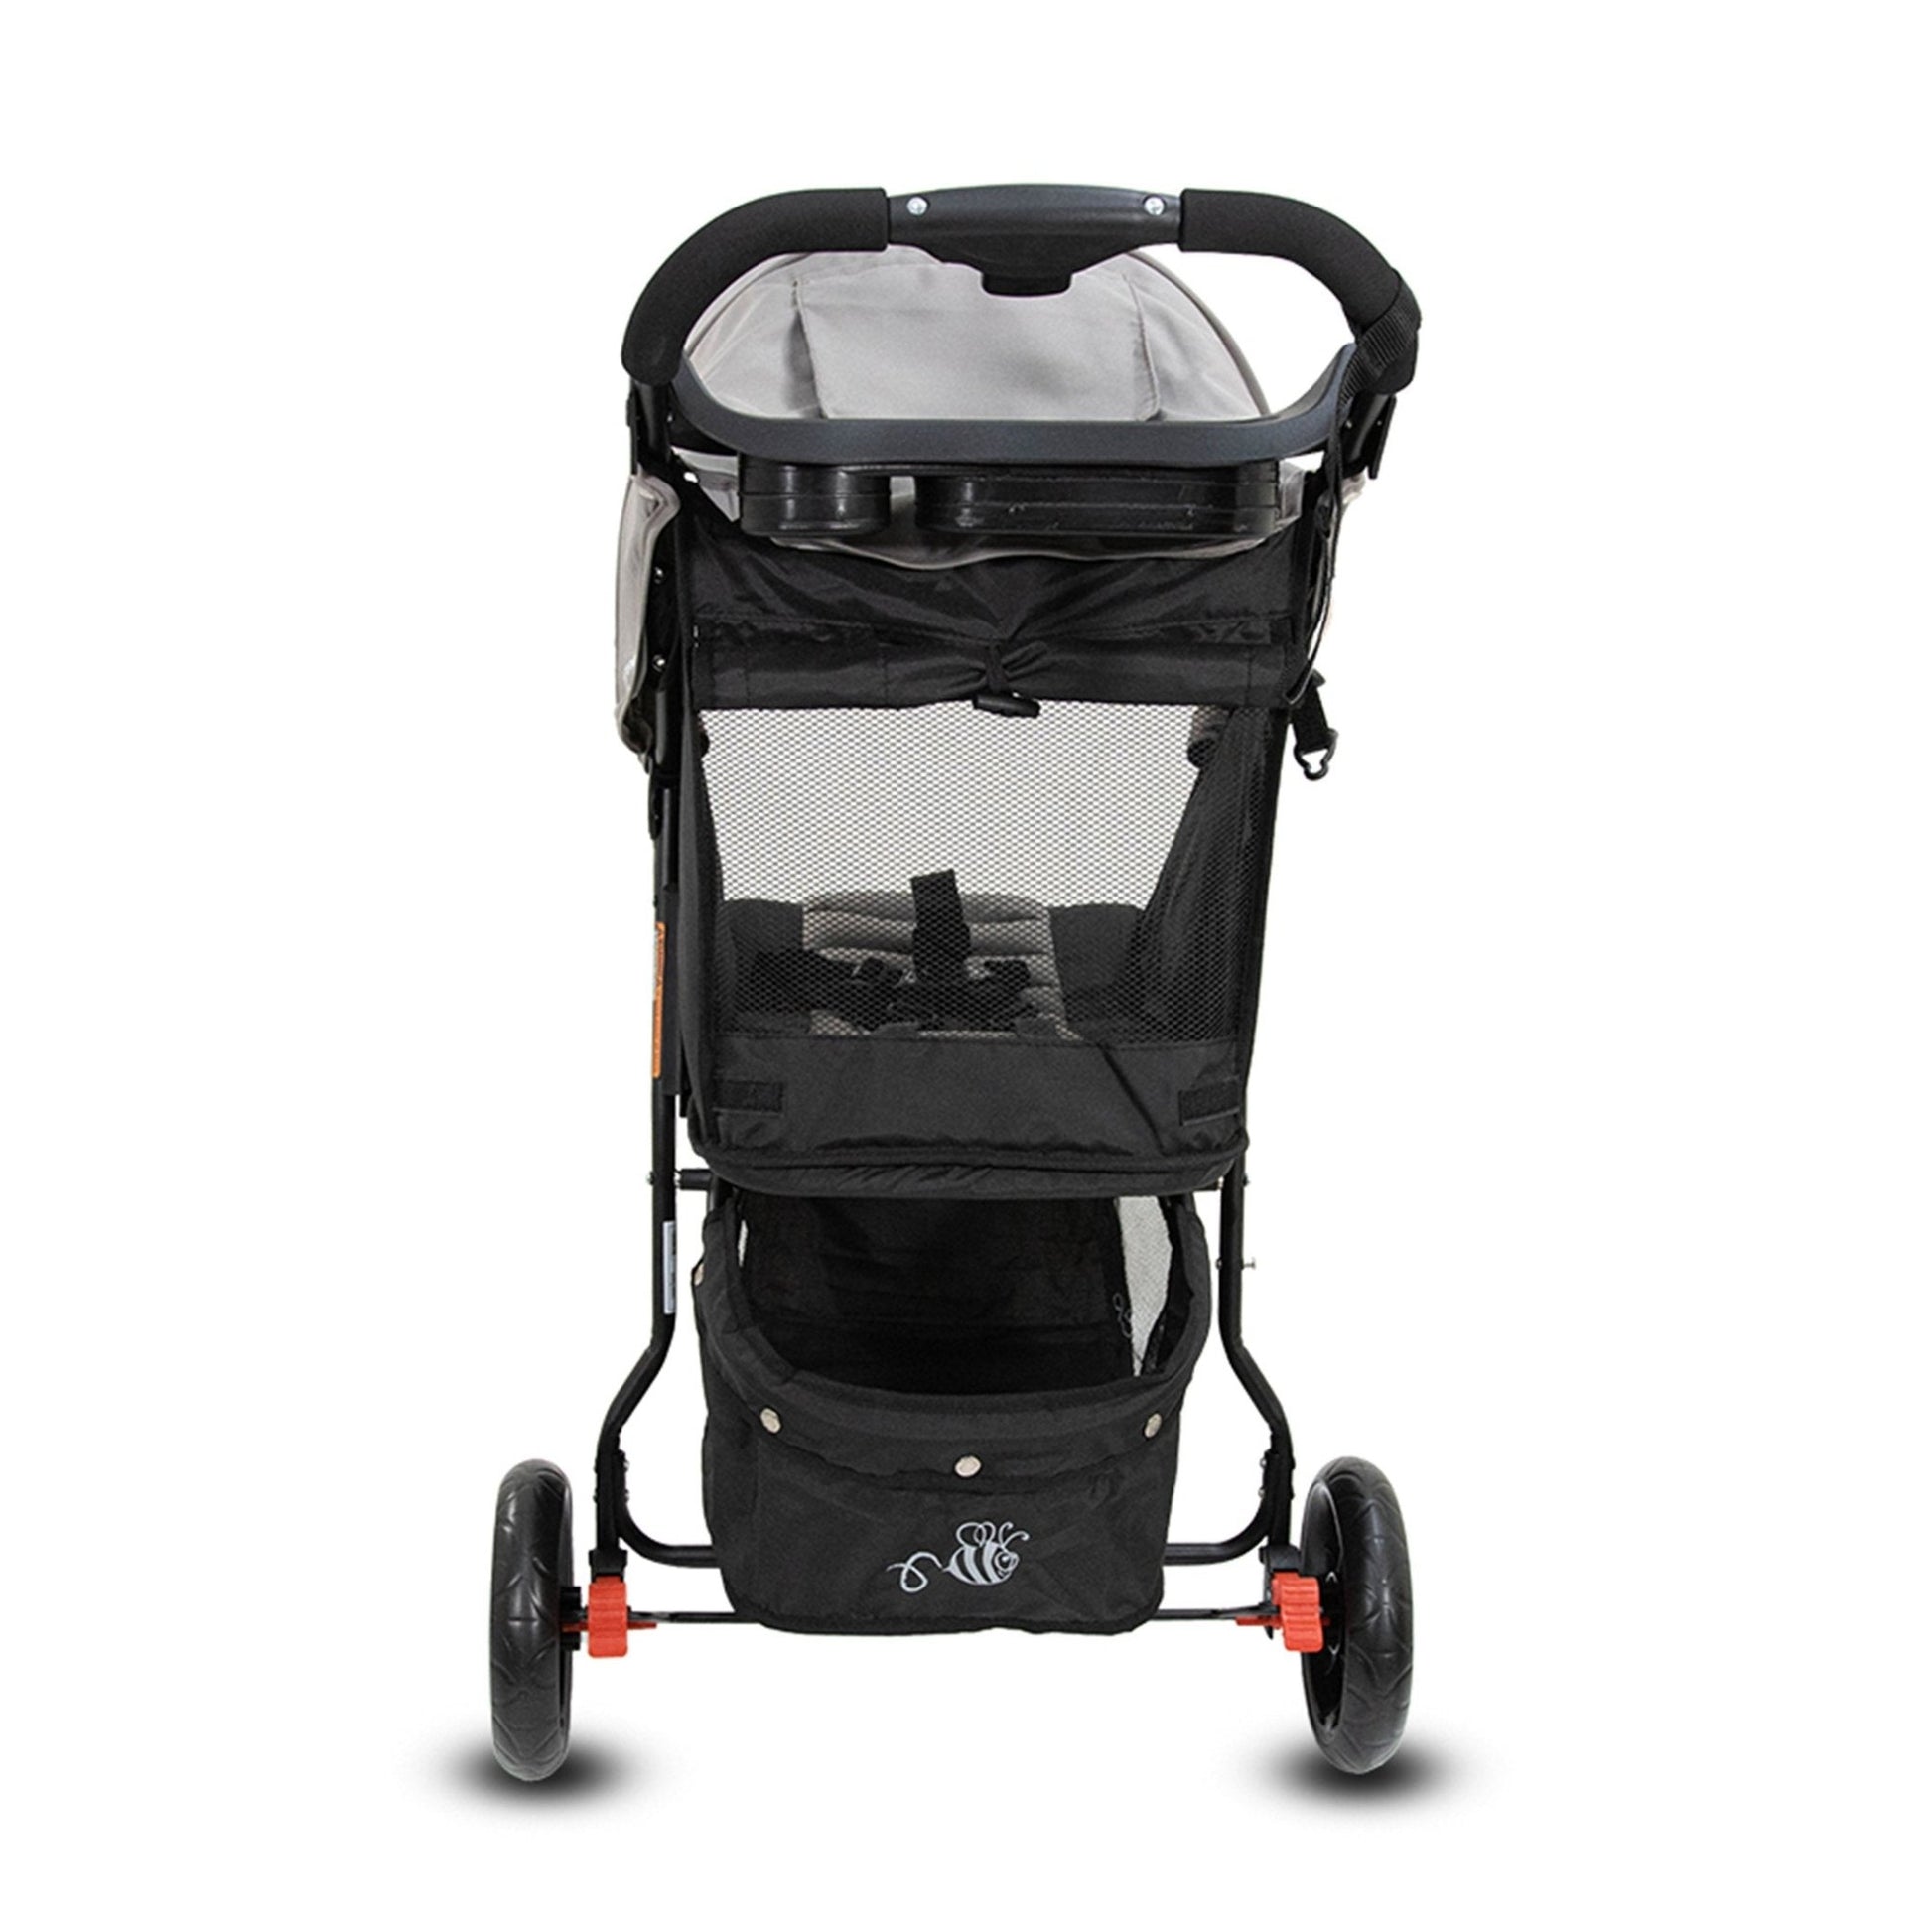 Veebee Navigator Stroller 3-wheel Pram For Newborns To Toddlers - Fauna - Little Kids Business